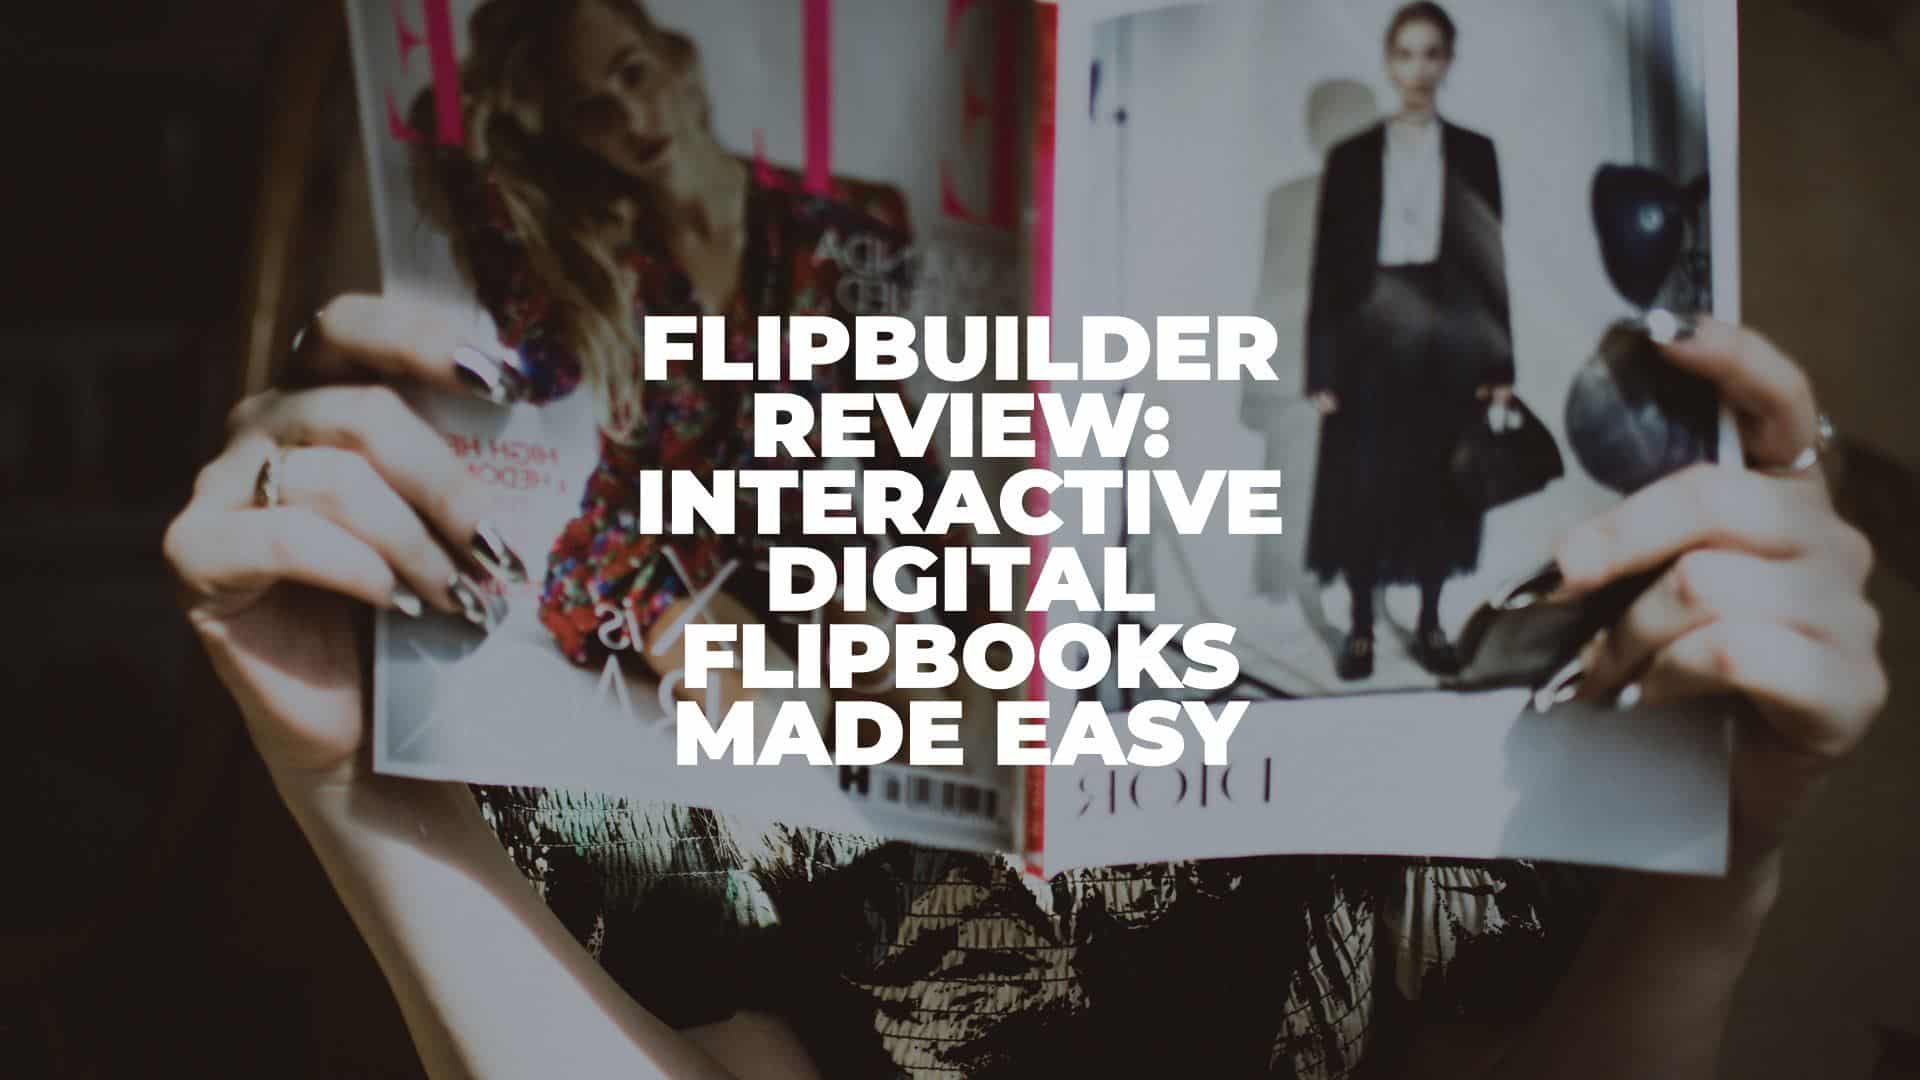 FlipBuilder Review - Featured Image